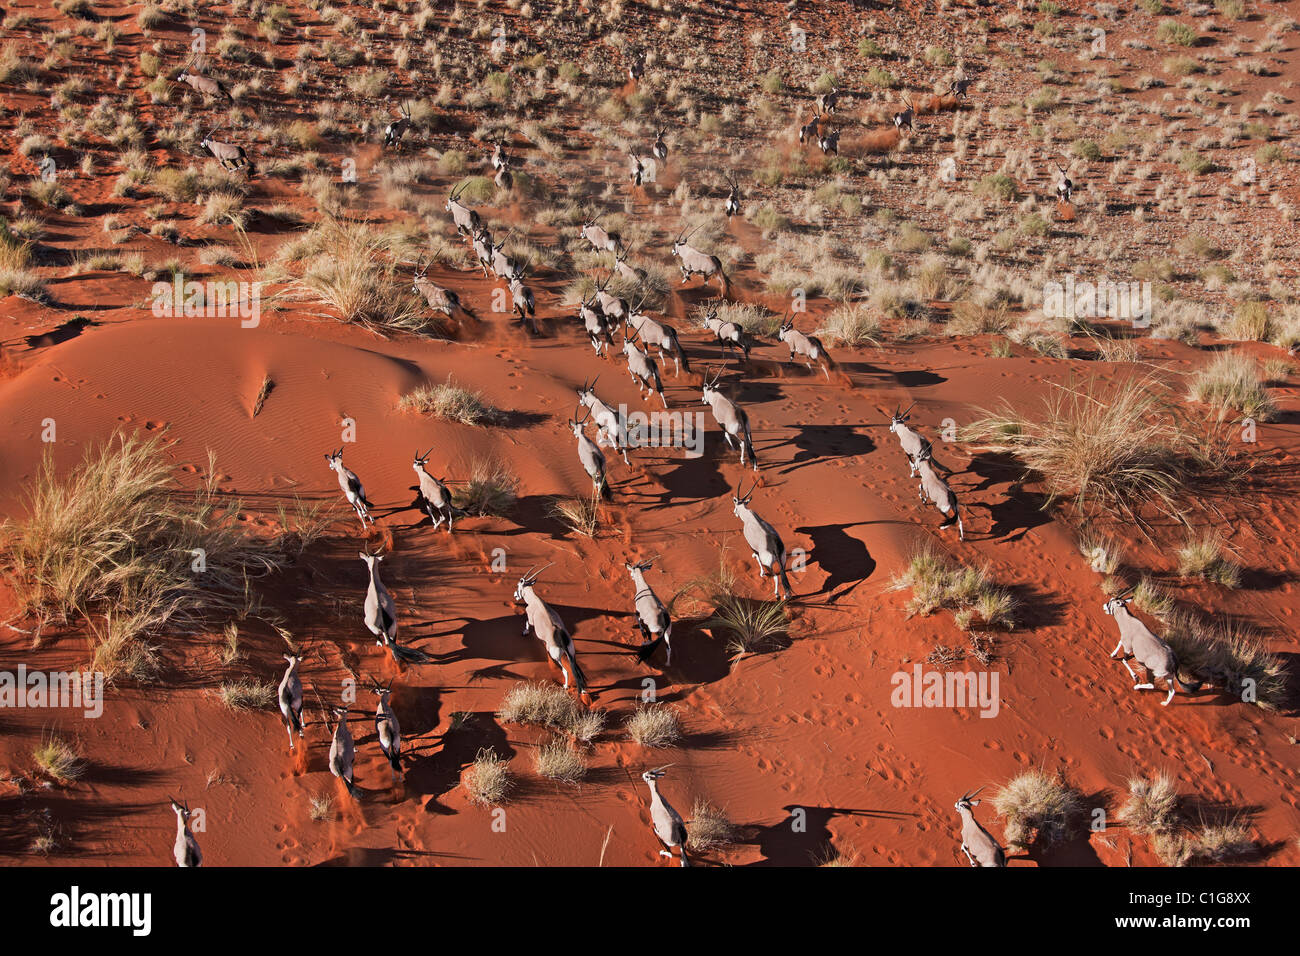 Gemsbok (Oryx gazella) In tipico habitat Deserto Deserto Namibiano Foto Stock